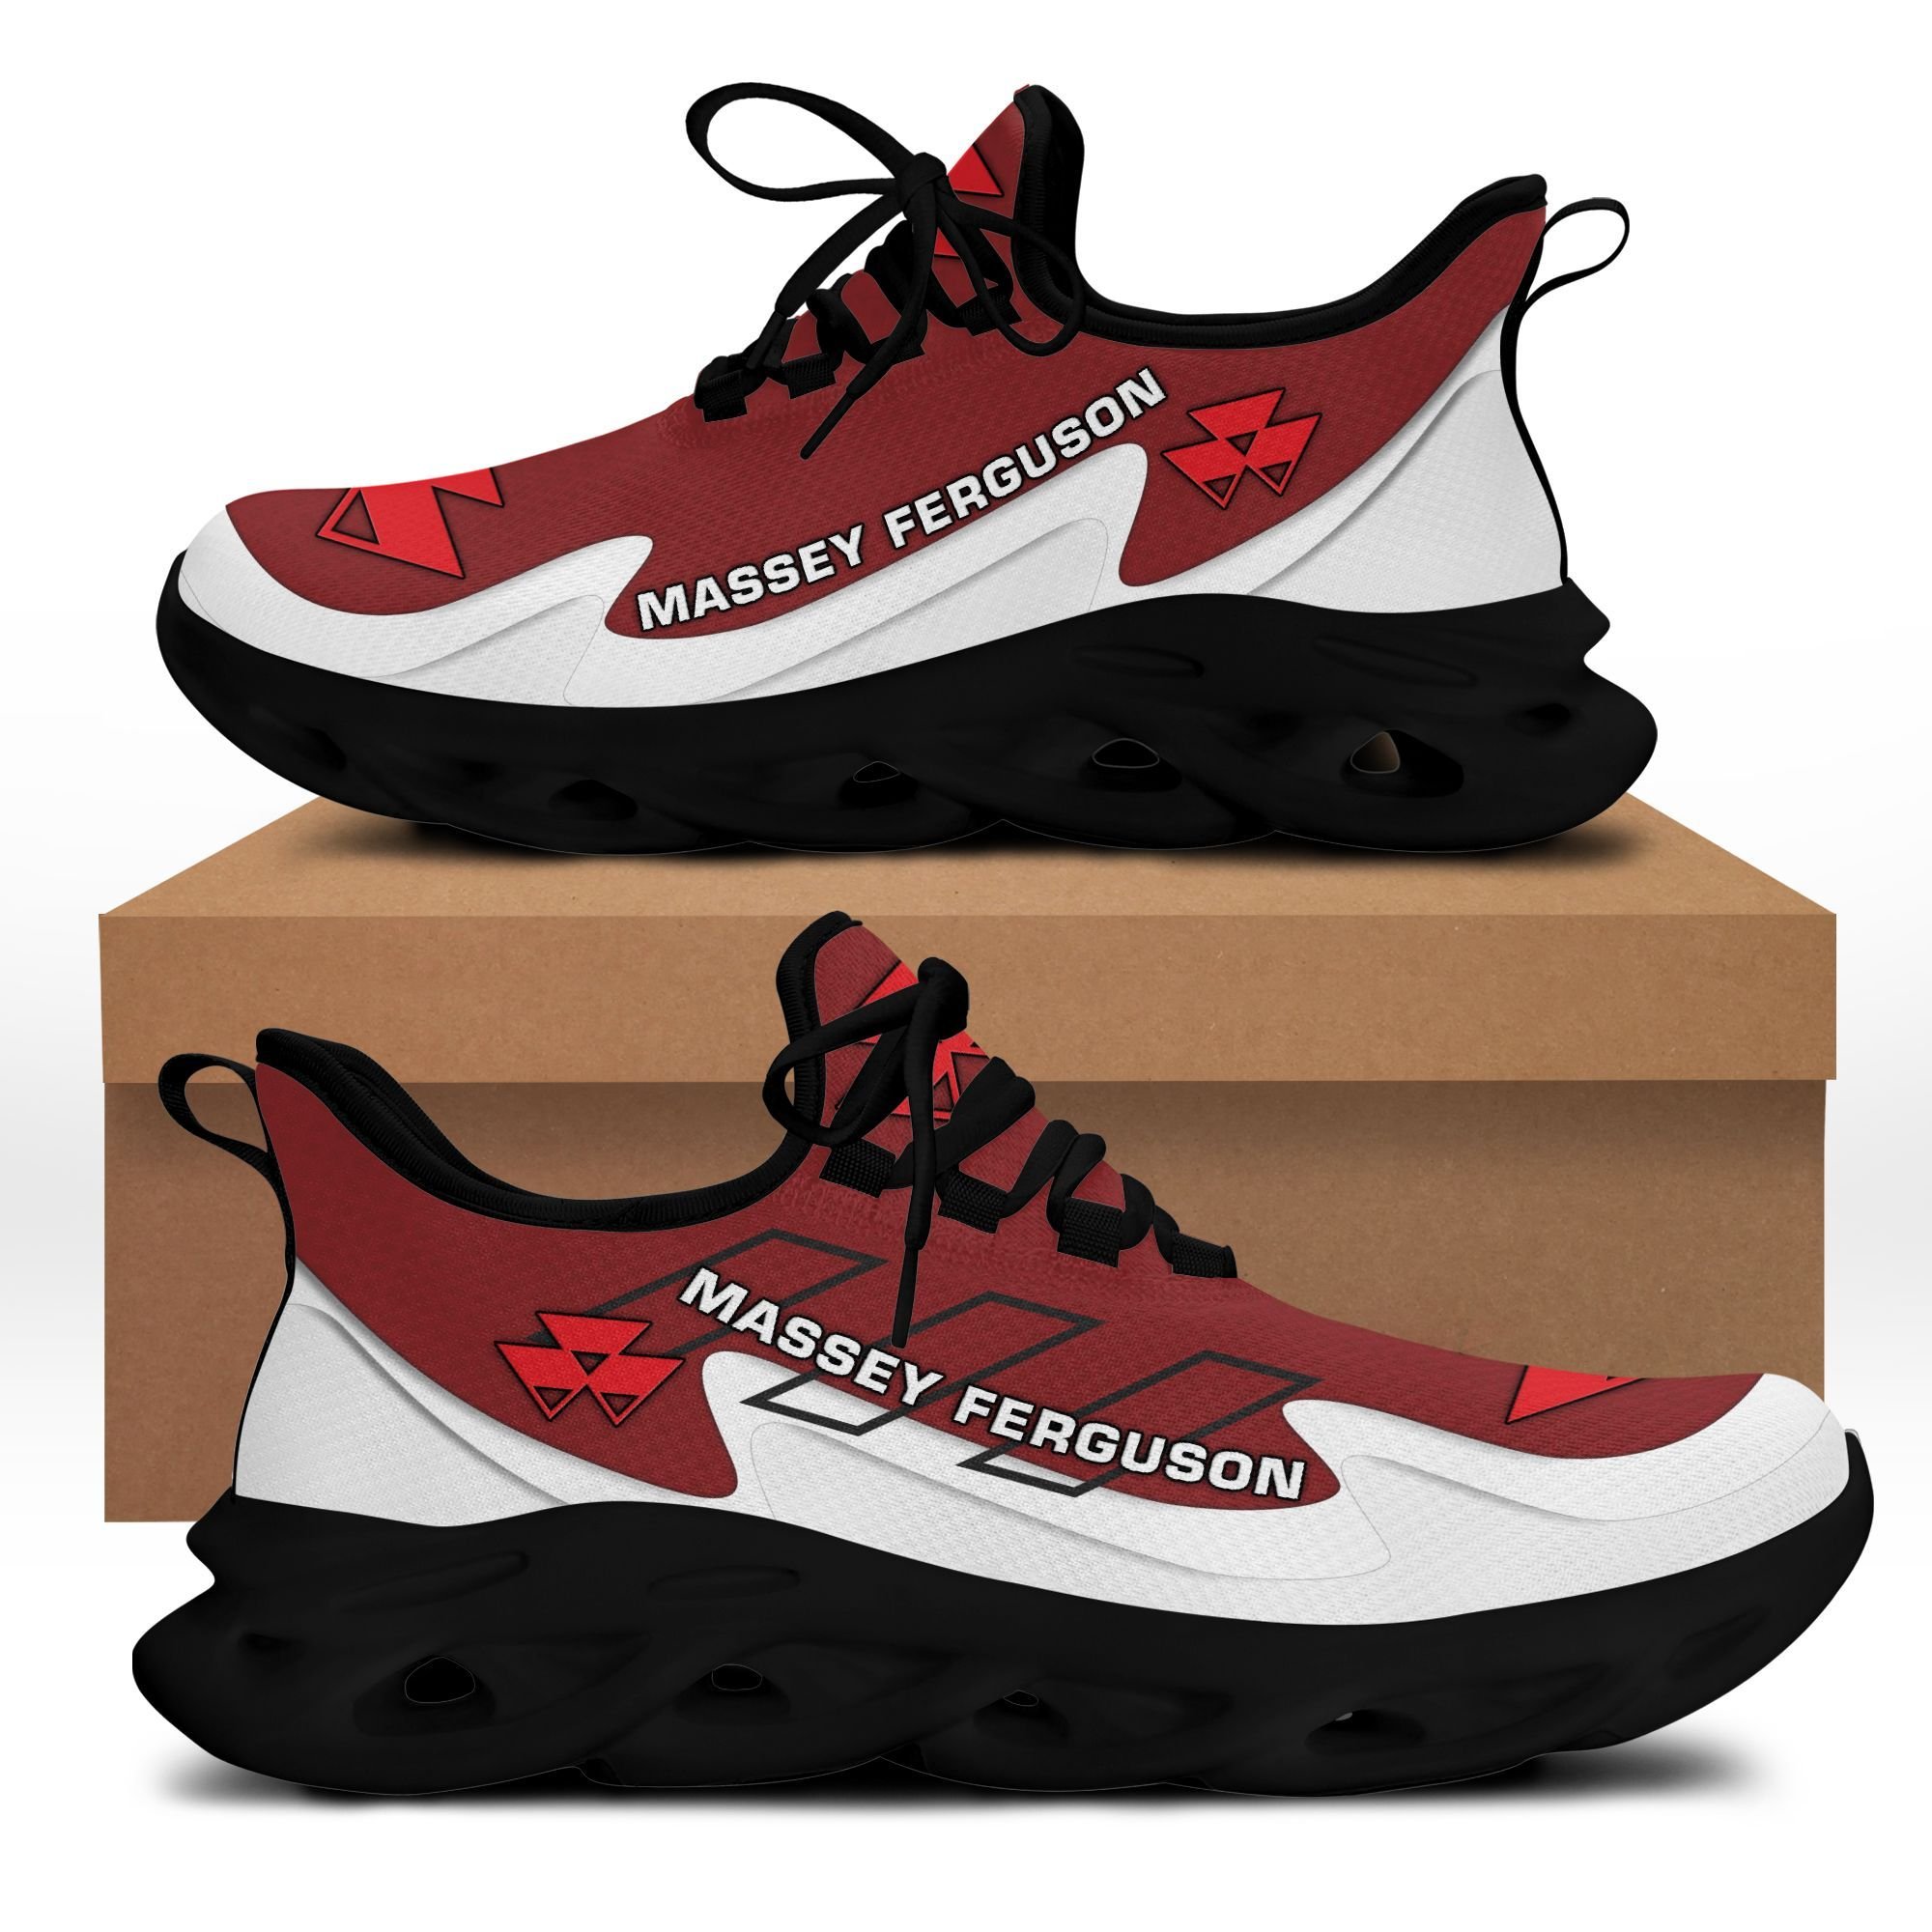 Massey Ferguson Dvt-Ht Bs Running Shoes Ver 1 (Red) – Ride Clothing Shop